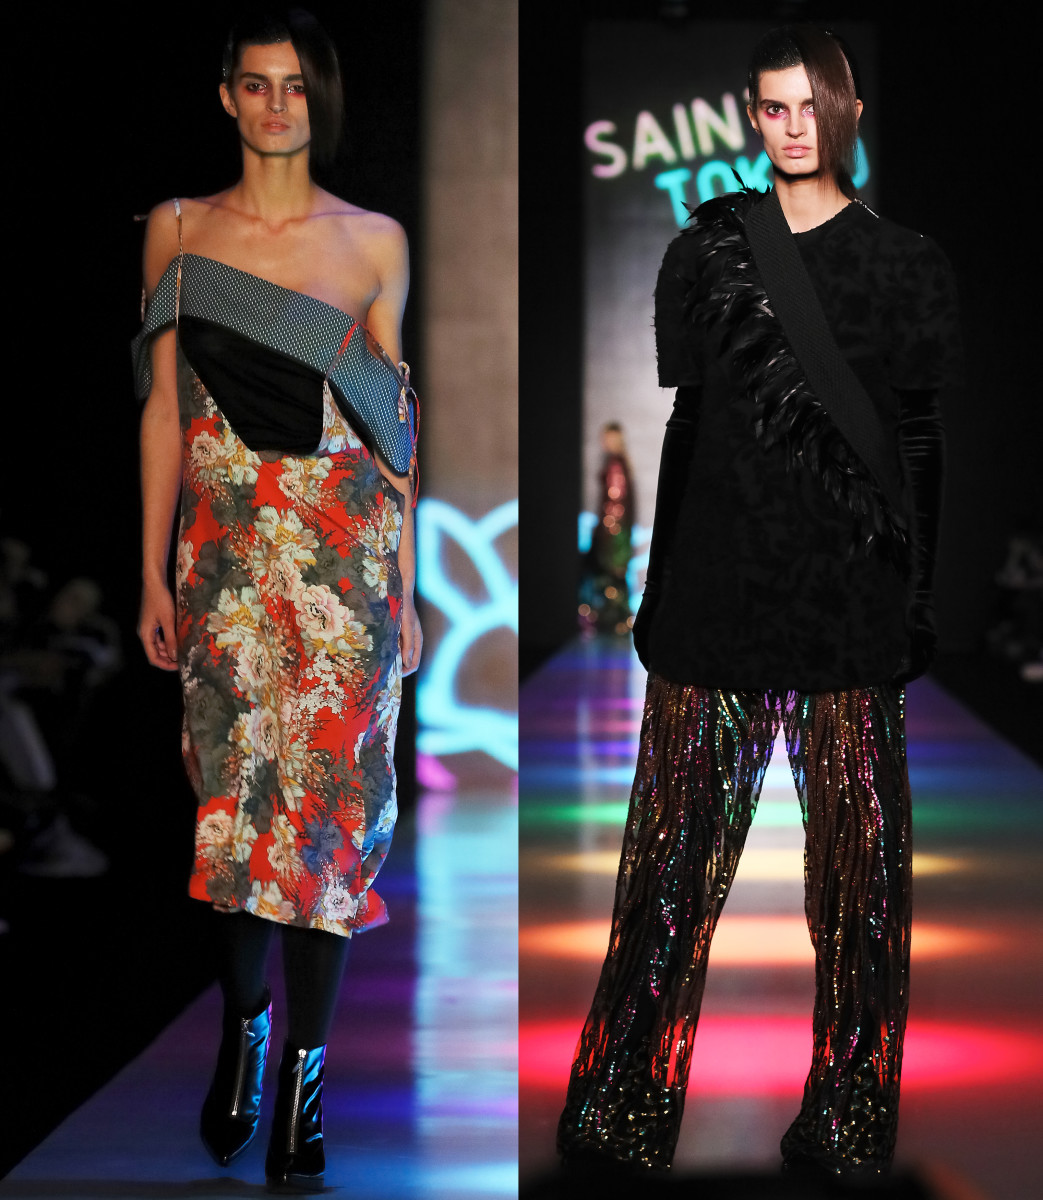 Sasha Panika walks in the Saint Tokyo show on March 11. Photo: Mercedes-Benz Fashion Week Russia